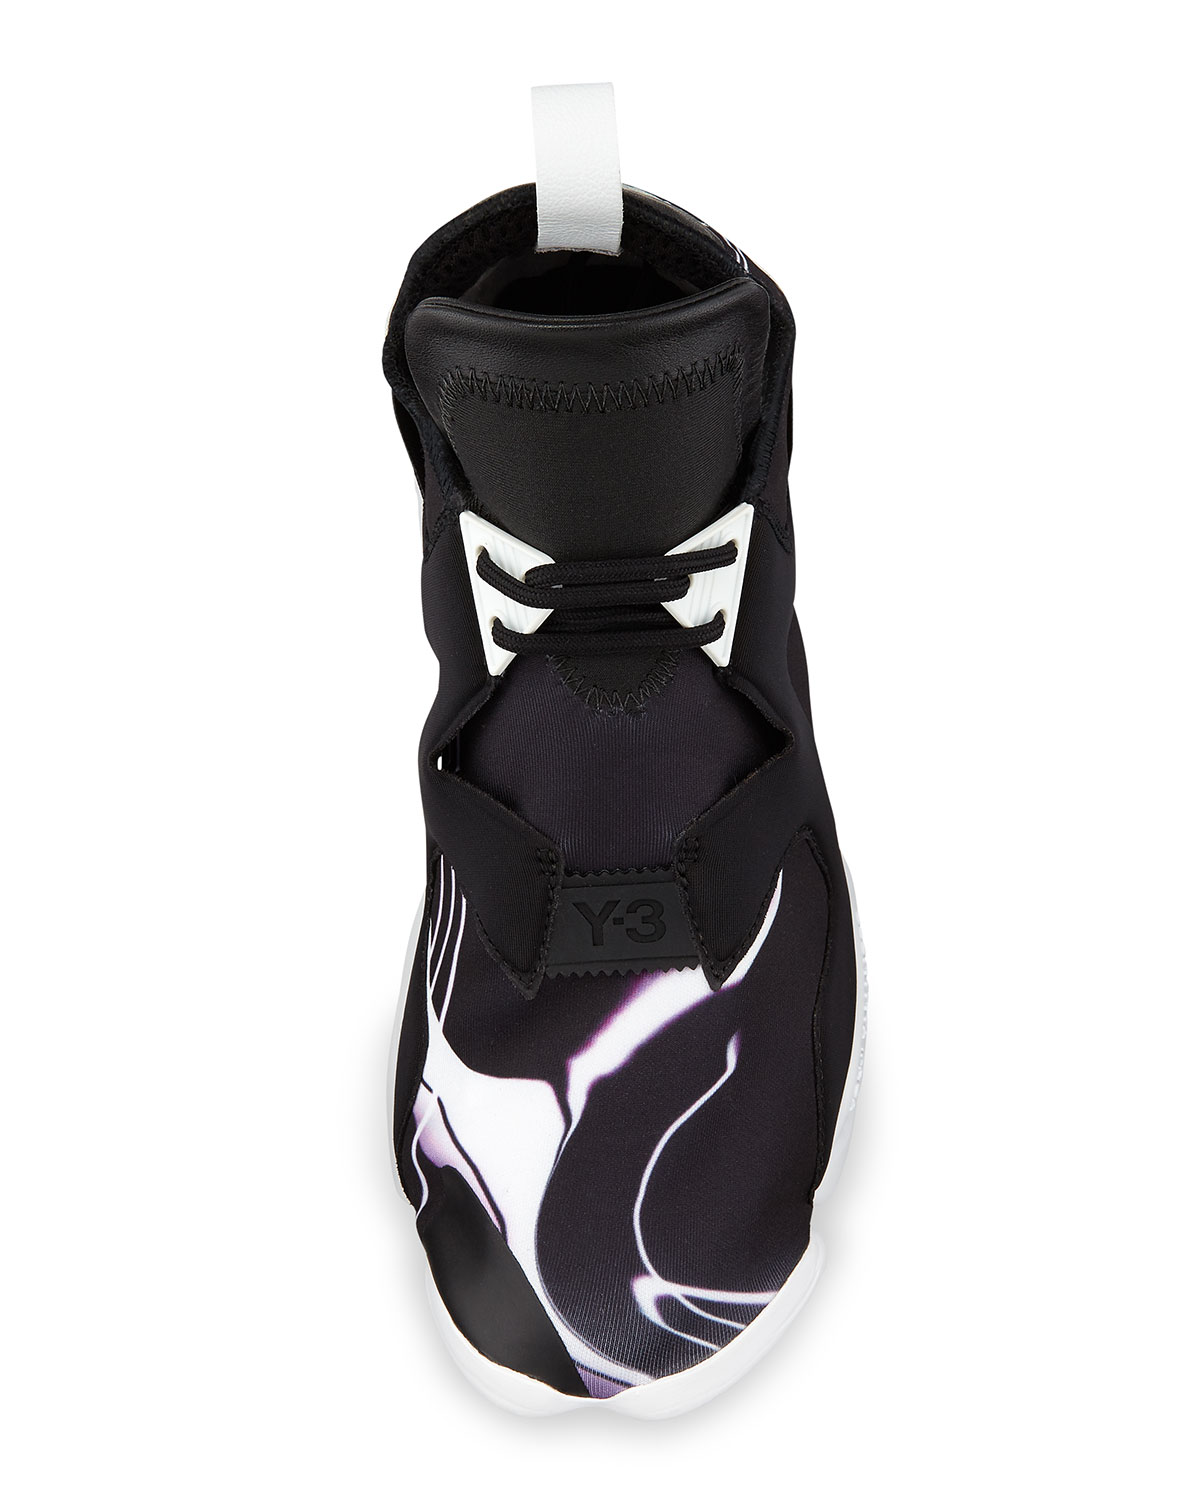 Kohna Lightning-Print Leather Sneaker, Black/White Purple